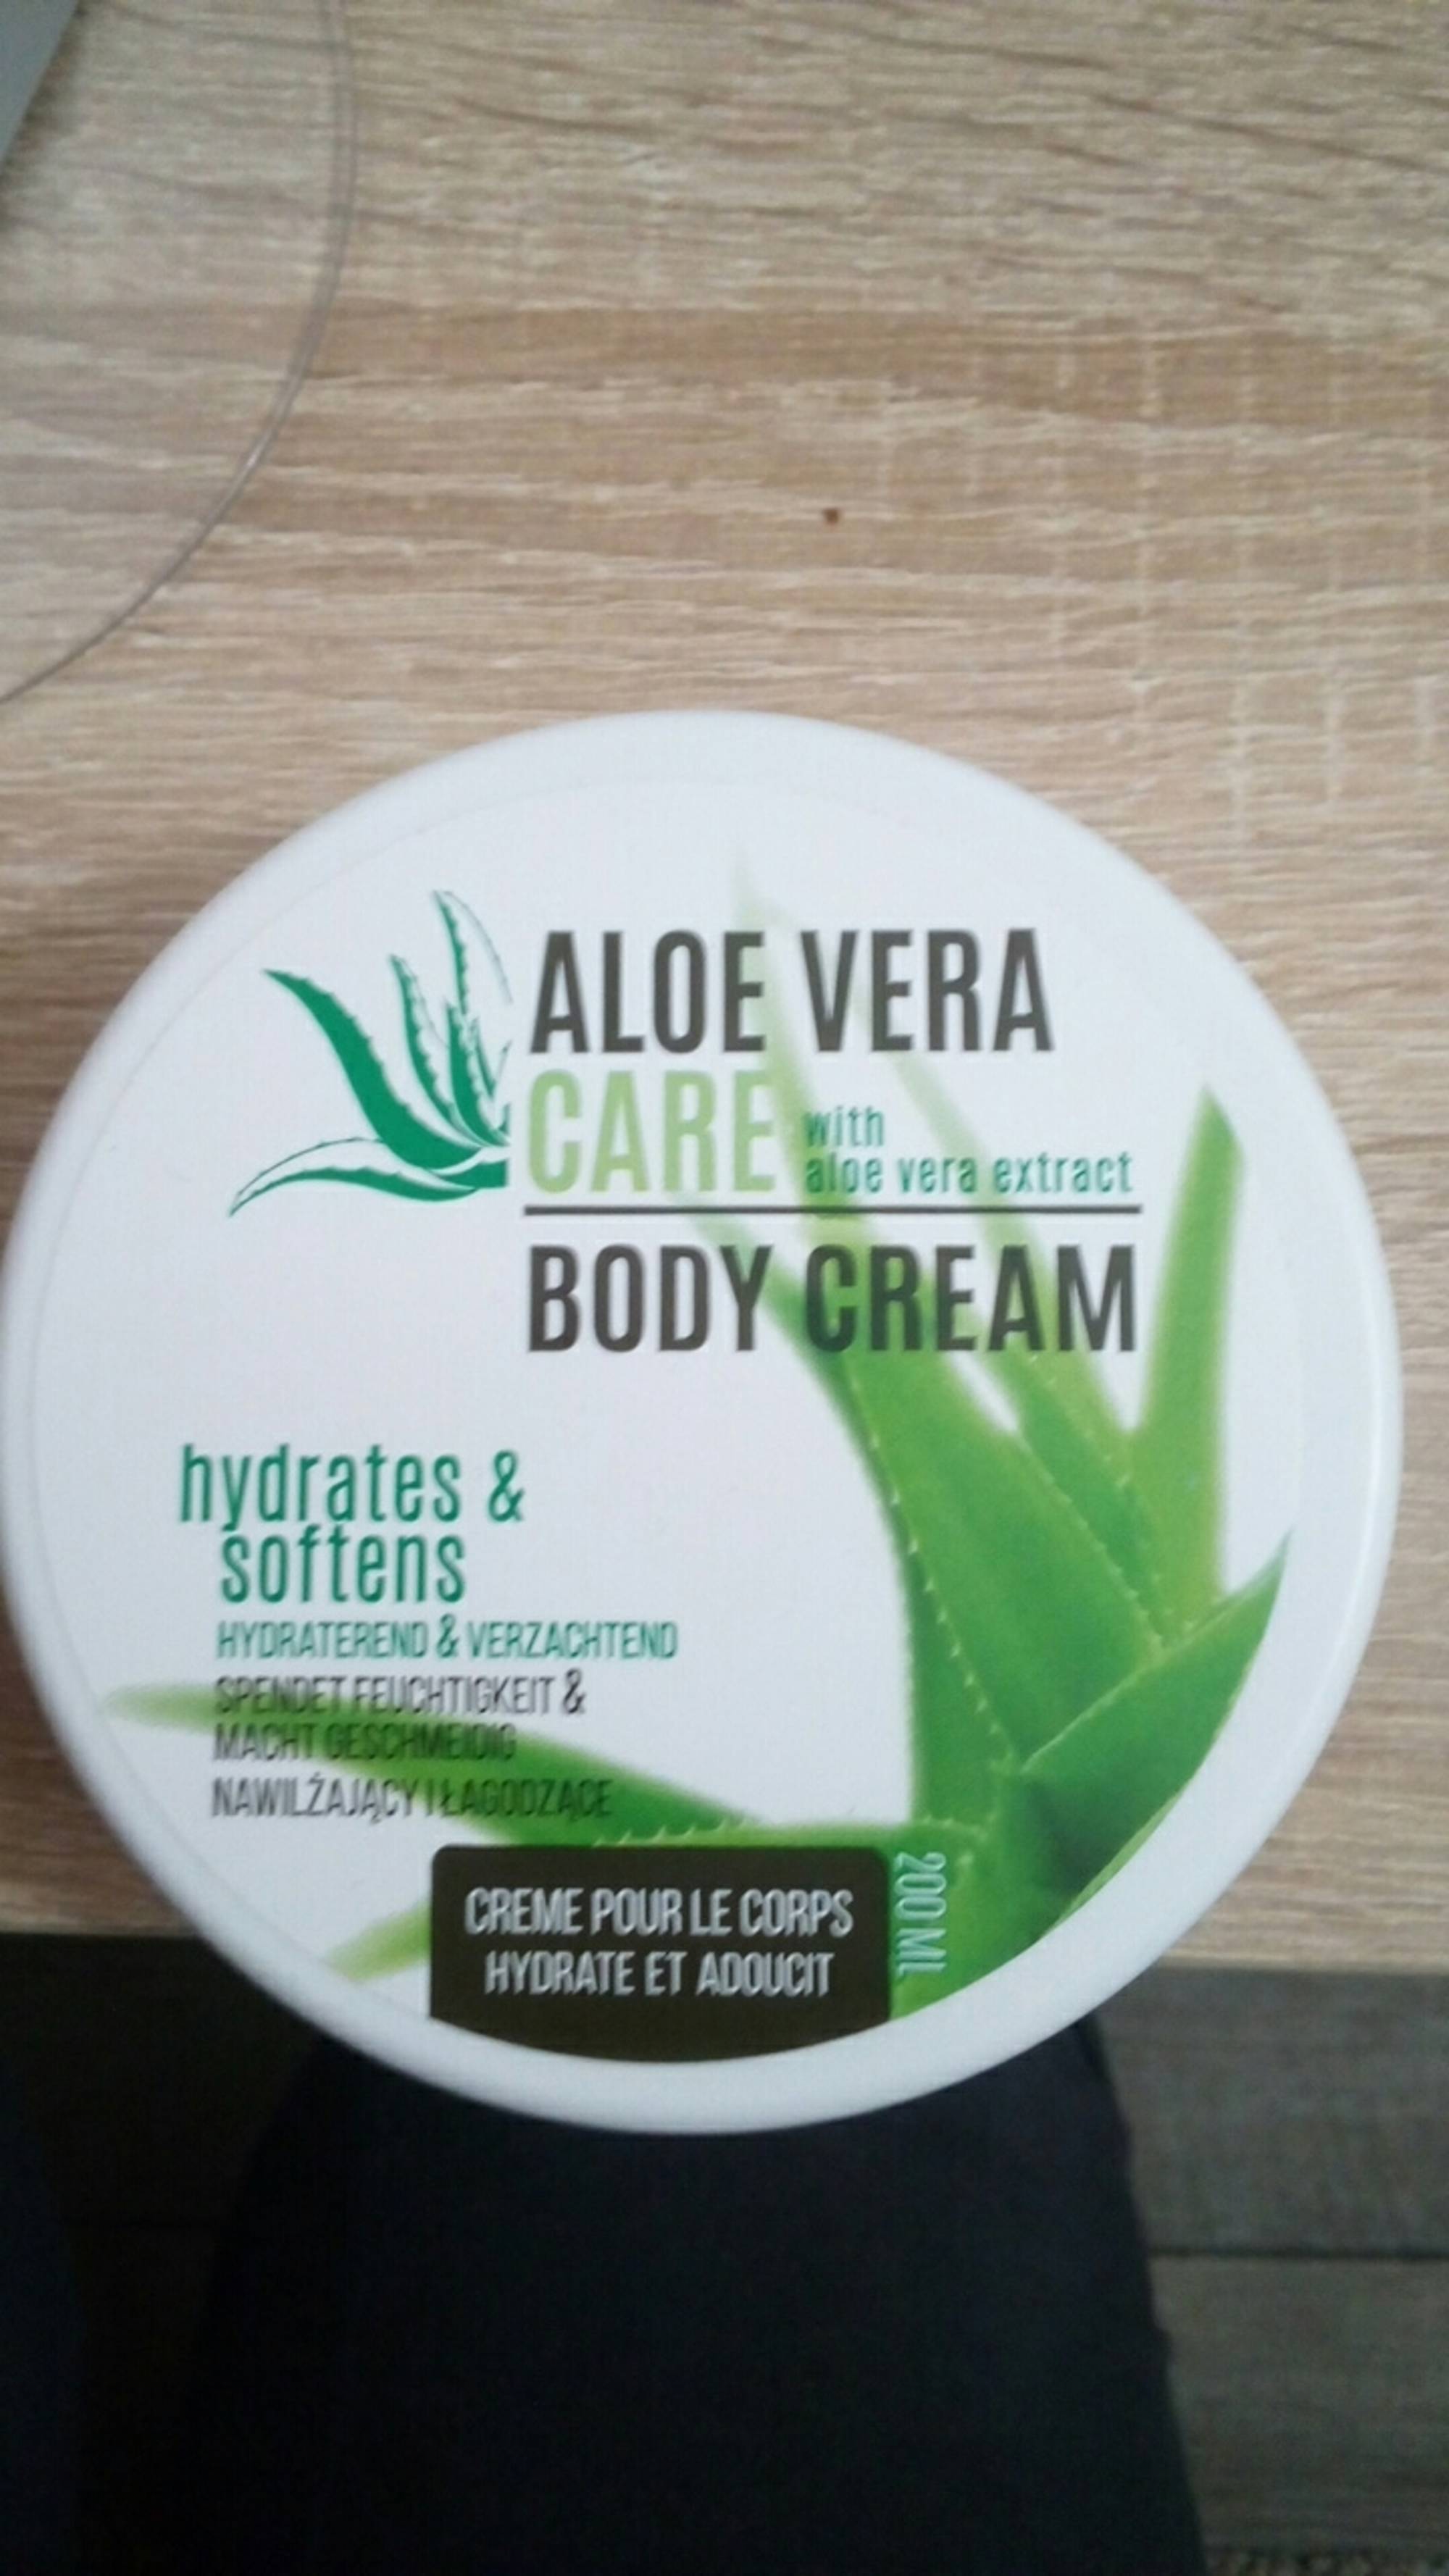 MAXBRANDS - Aloe vera care - Body cream hydrates & softens